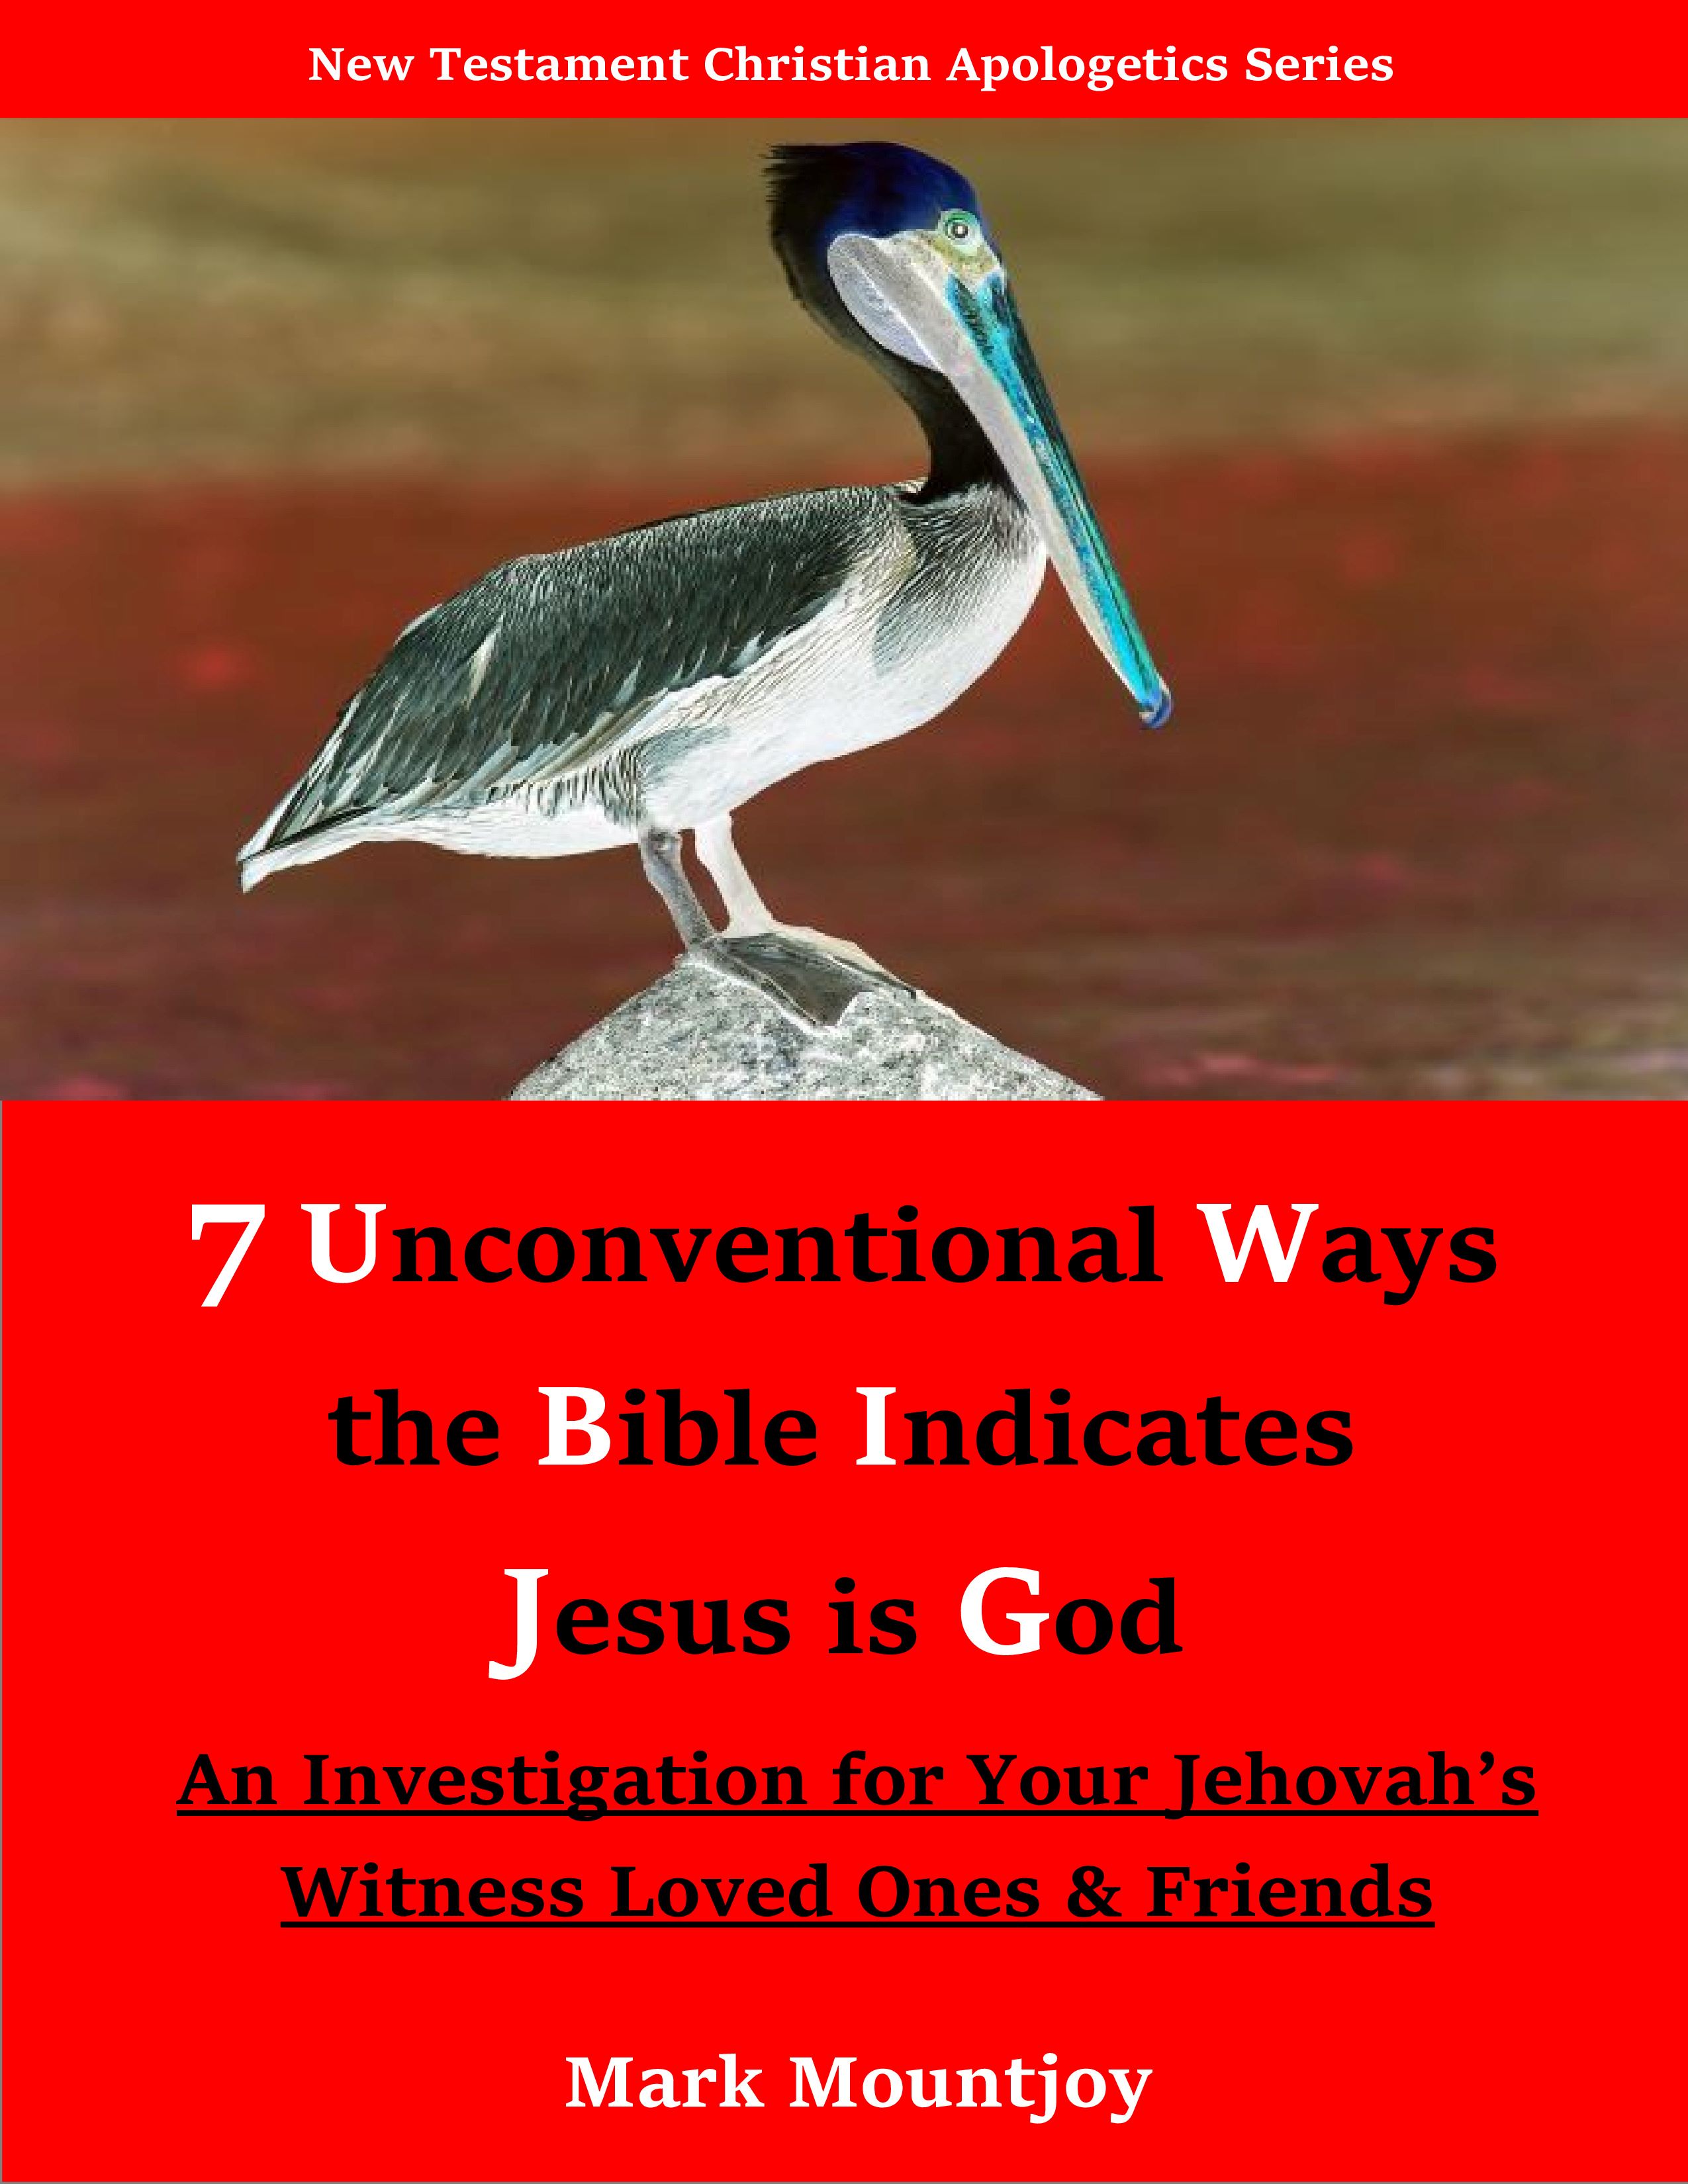 New Testament Christian Apologetics Series 1 7 Ways Jesus is God